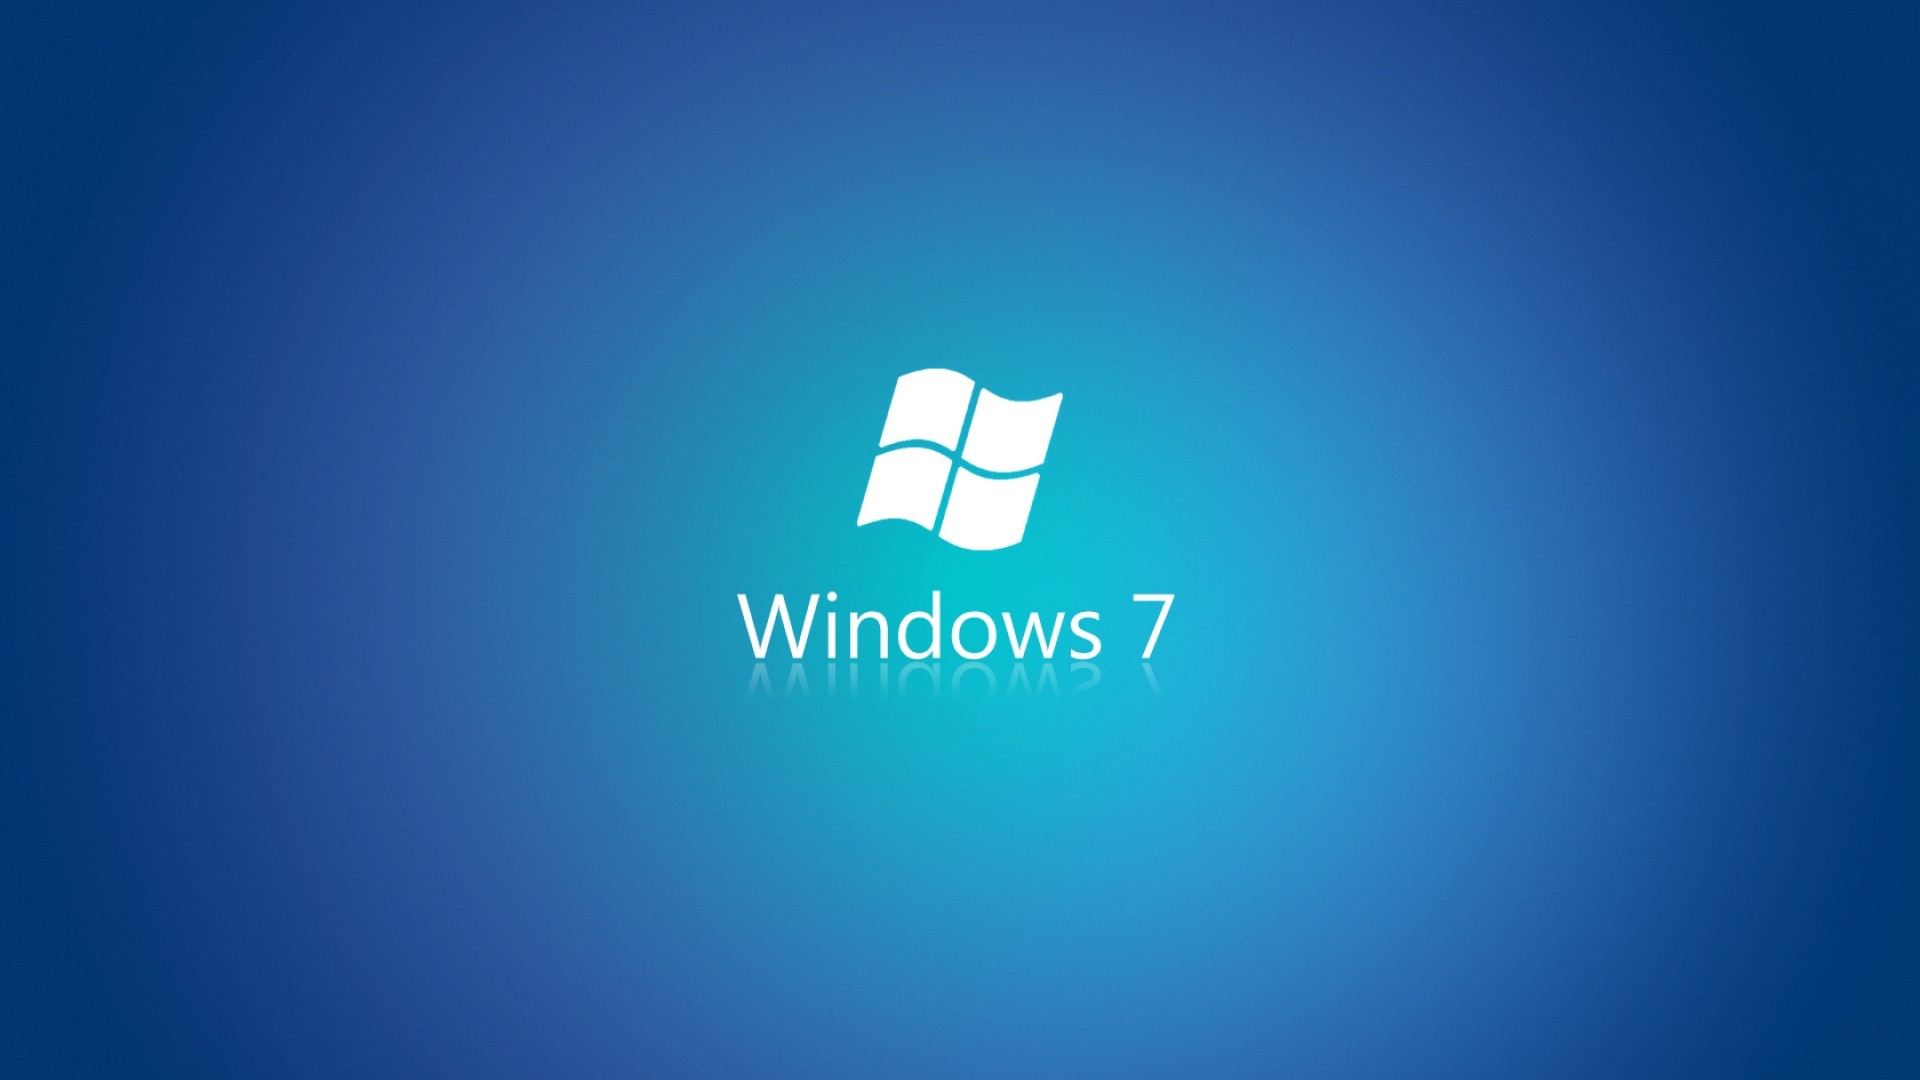 Download windows 7 logo wallpaper HD wallpaper 1920x1080